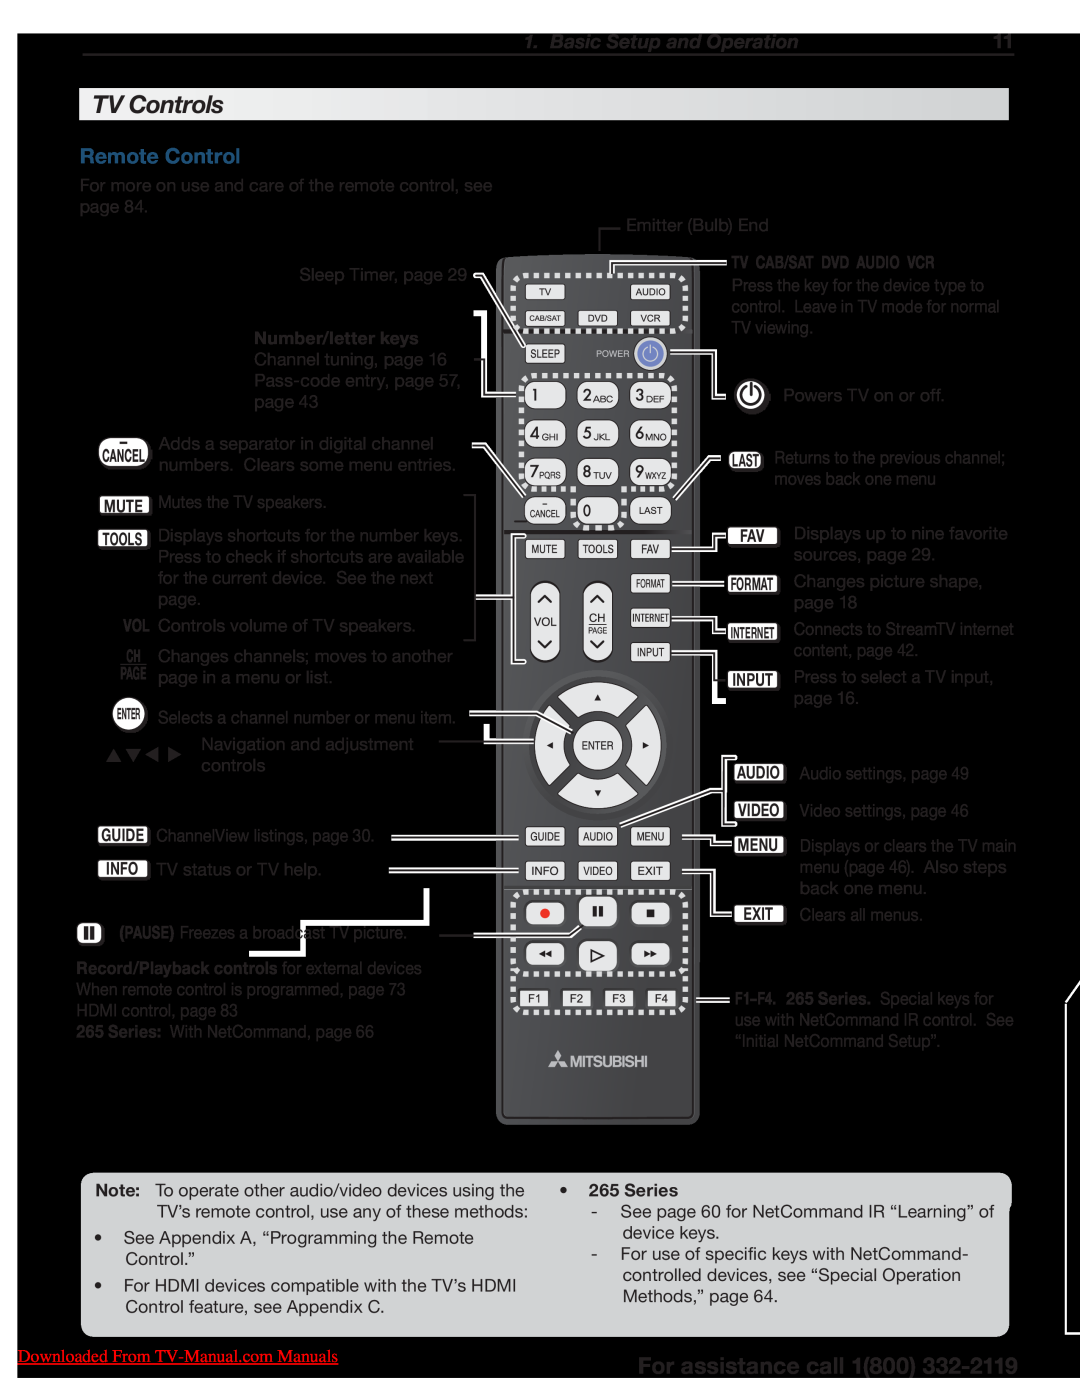 Unisen 265 Series TV Controls, Remote Control, Basic Setup and Operation, Number/letter keys, Tv Cab/Sat Dvd Audio Vcr 